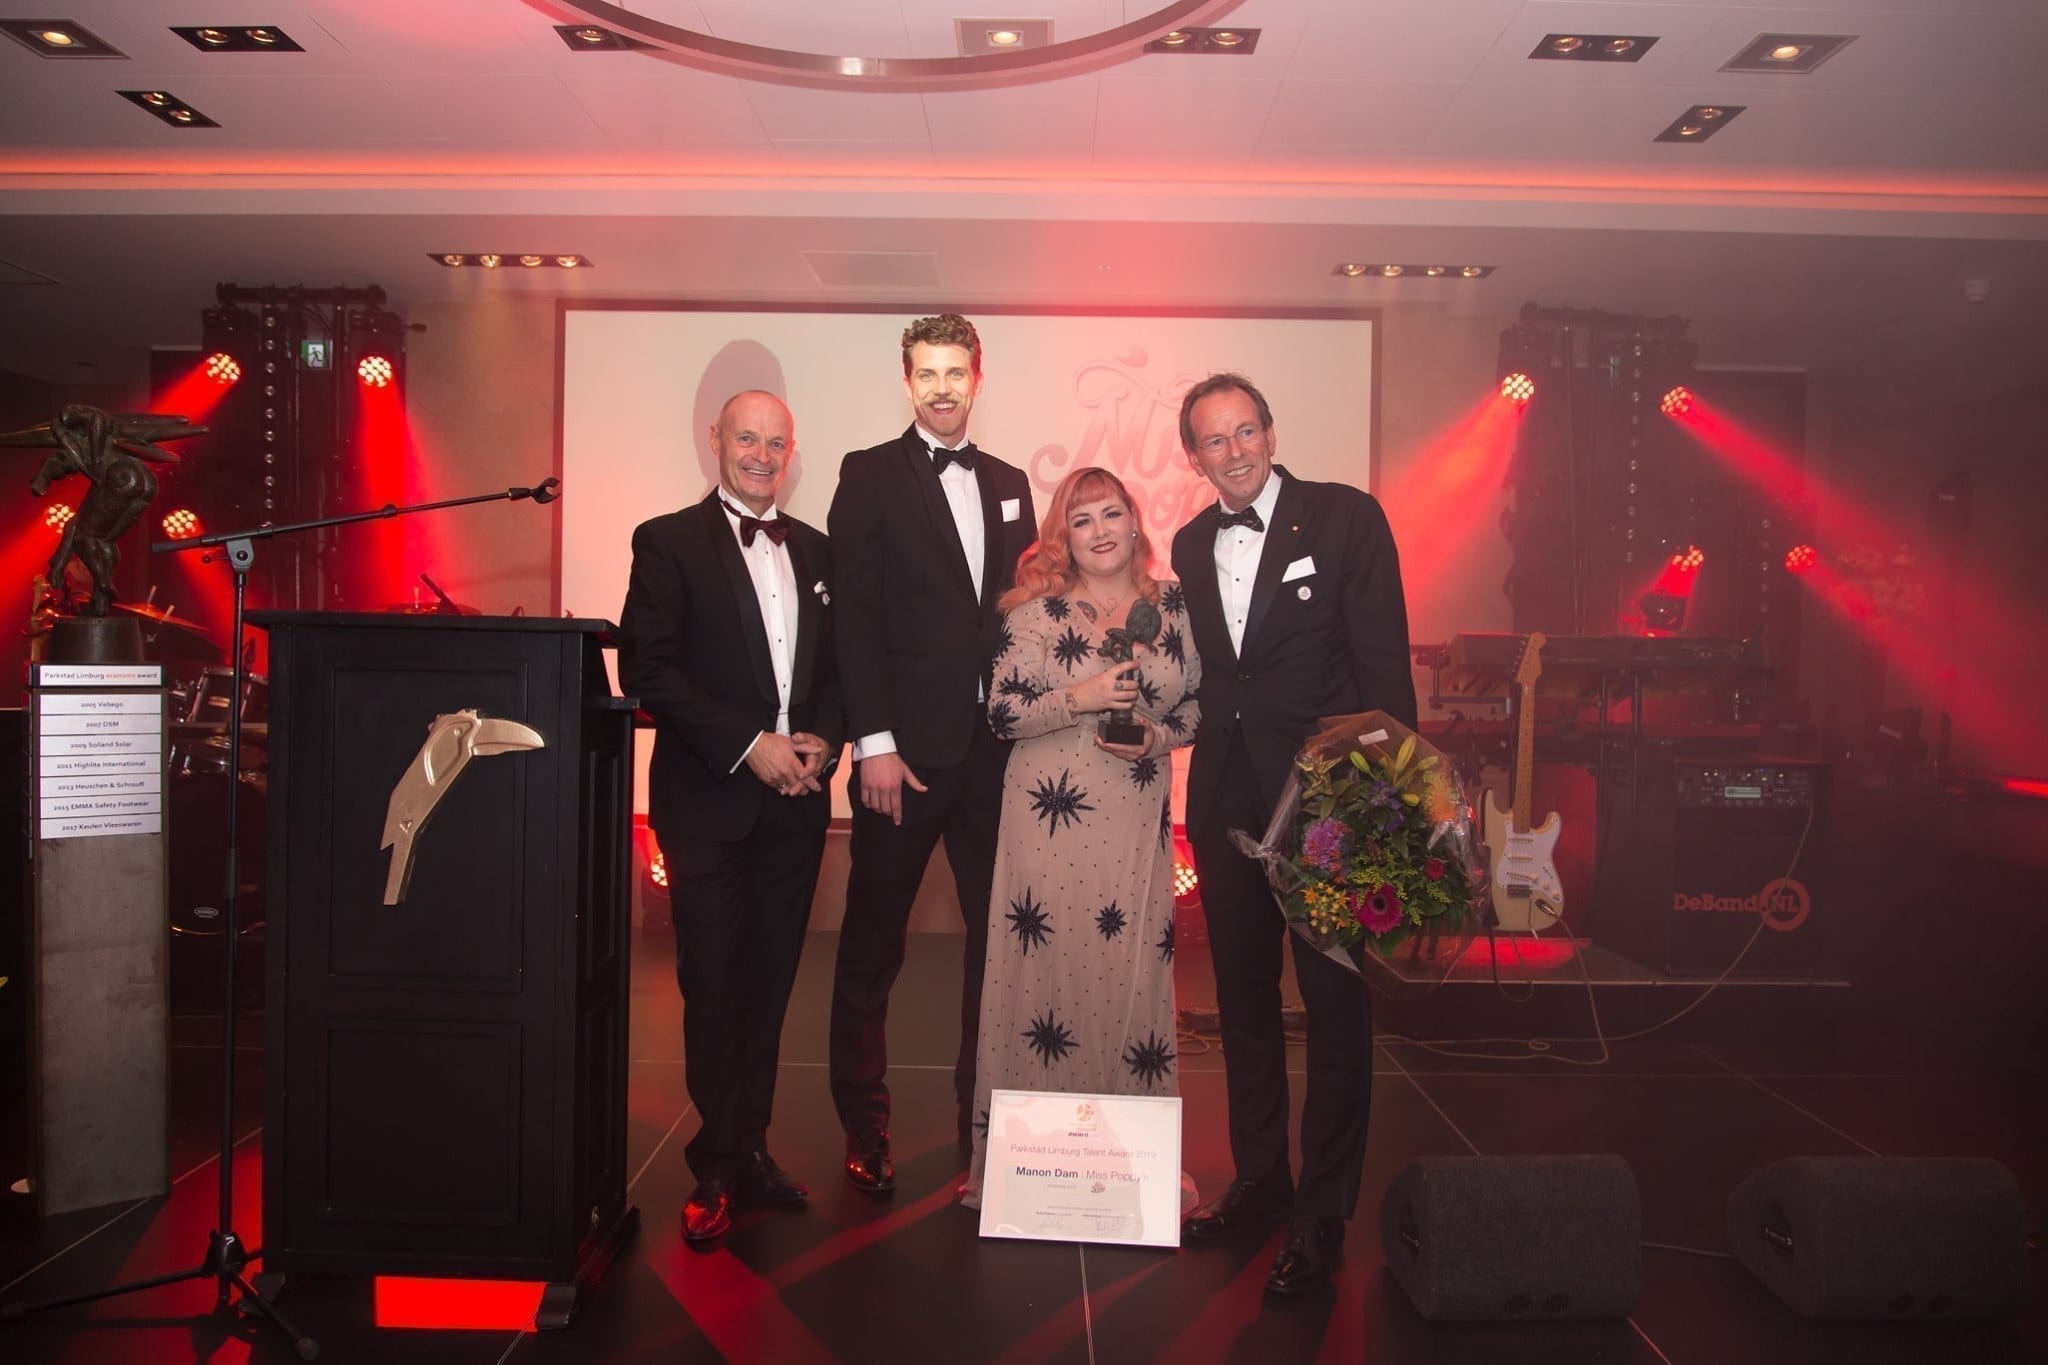 Uitreiking Parkstad Awards met soul zangeres Ruth Jacott en DeBand.NL | feestband.com